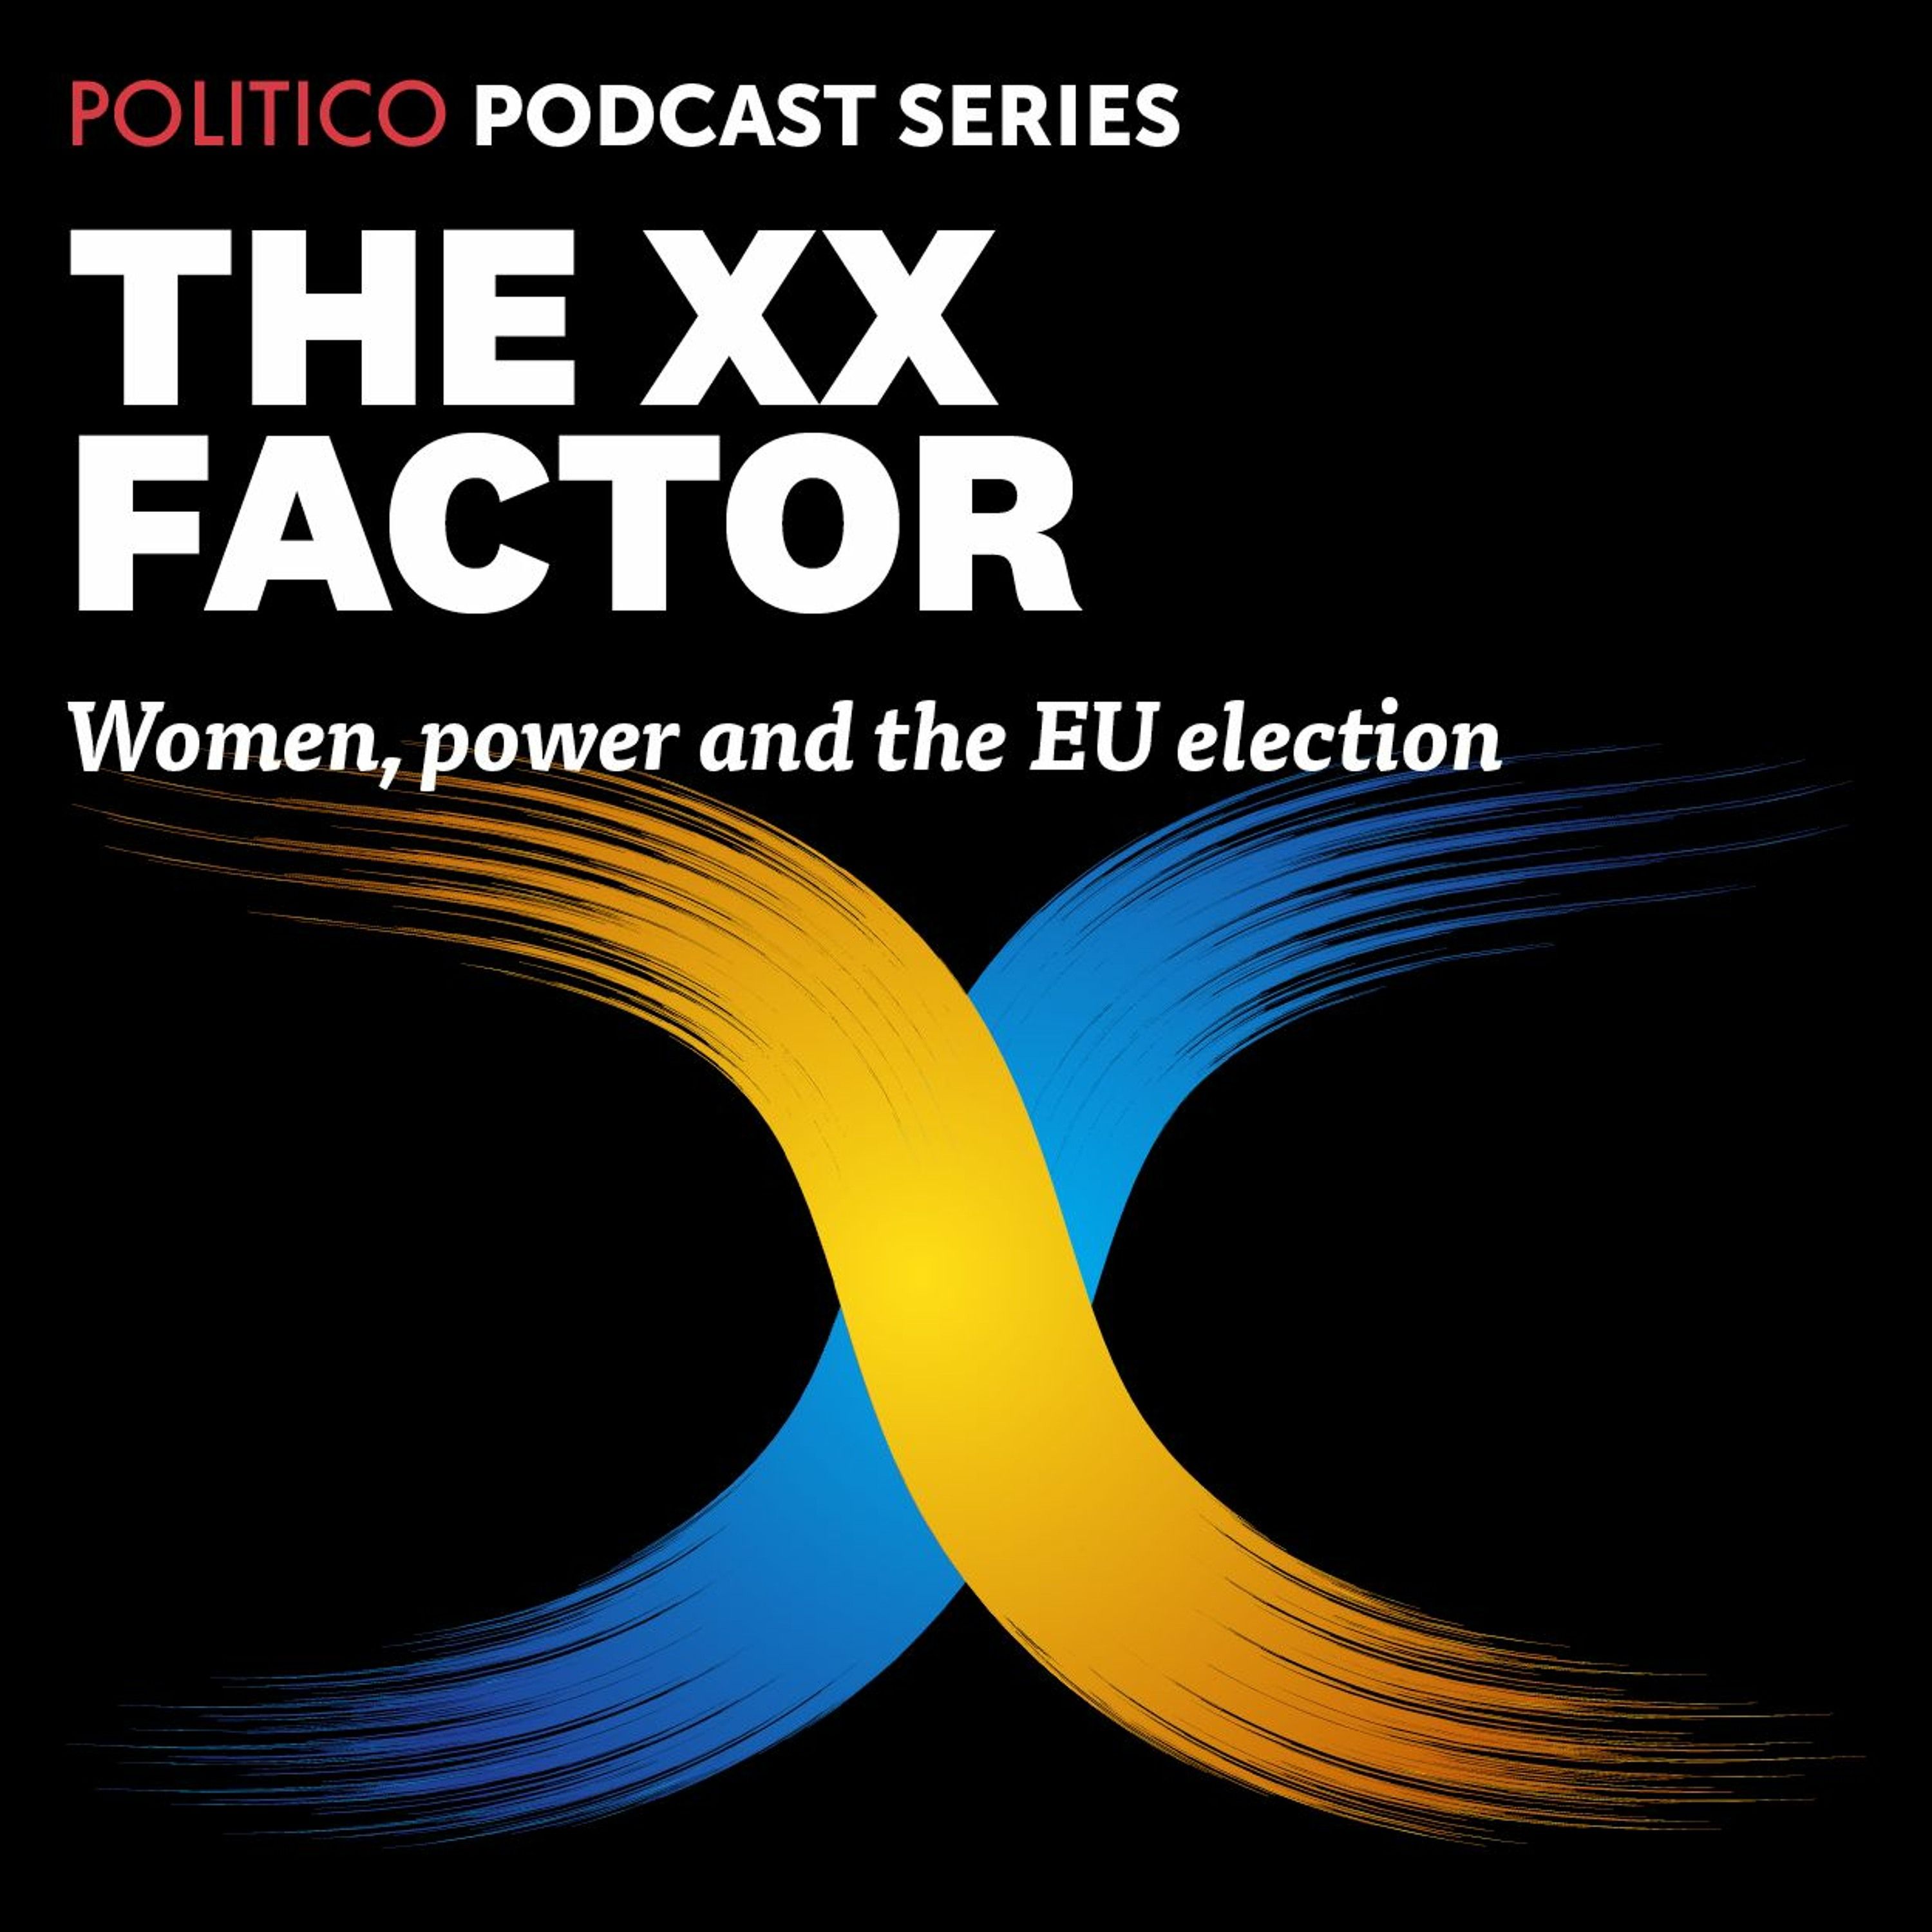 XX Factor 1 - Women, power and the EU election